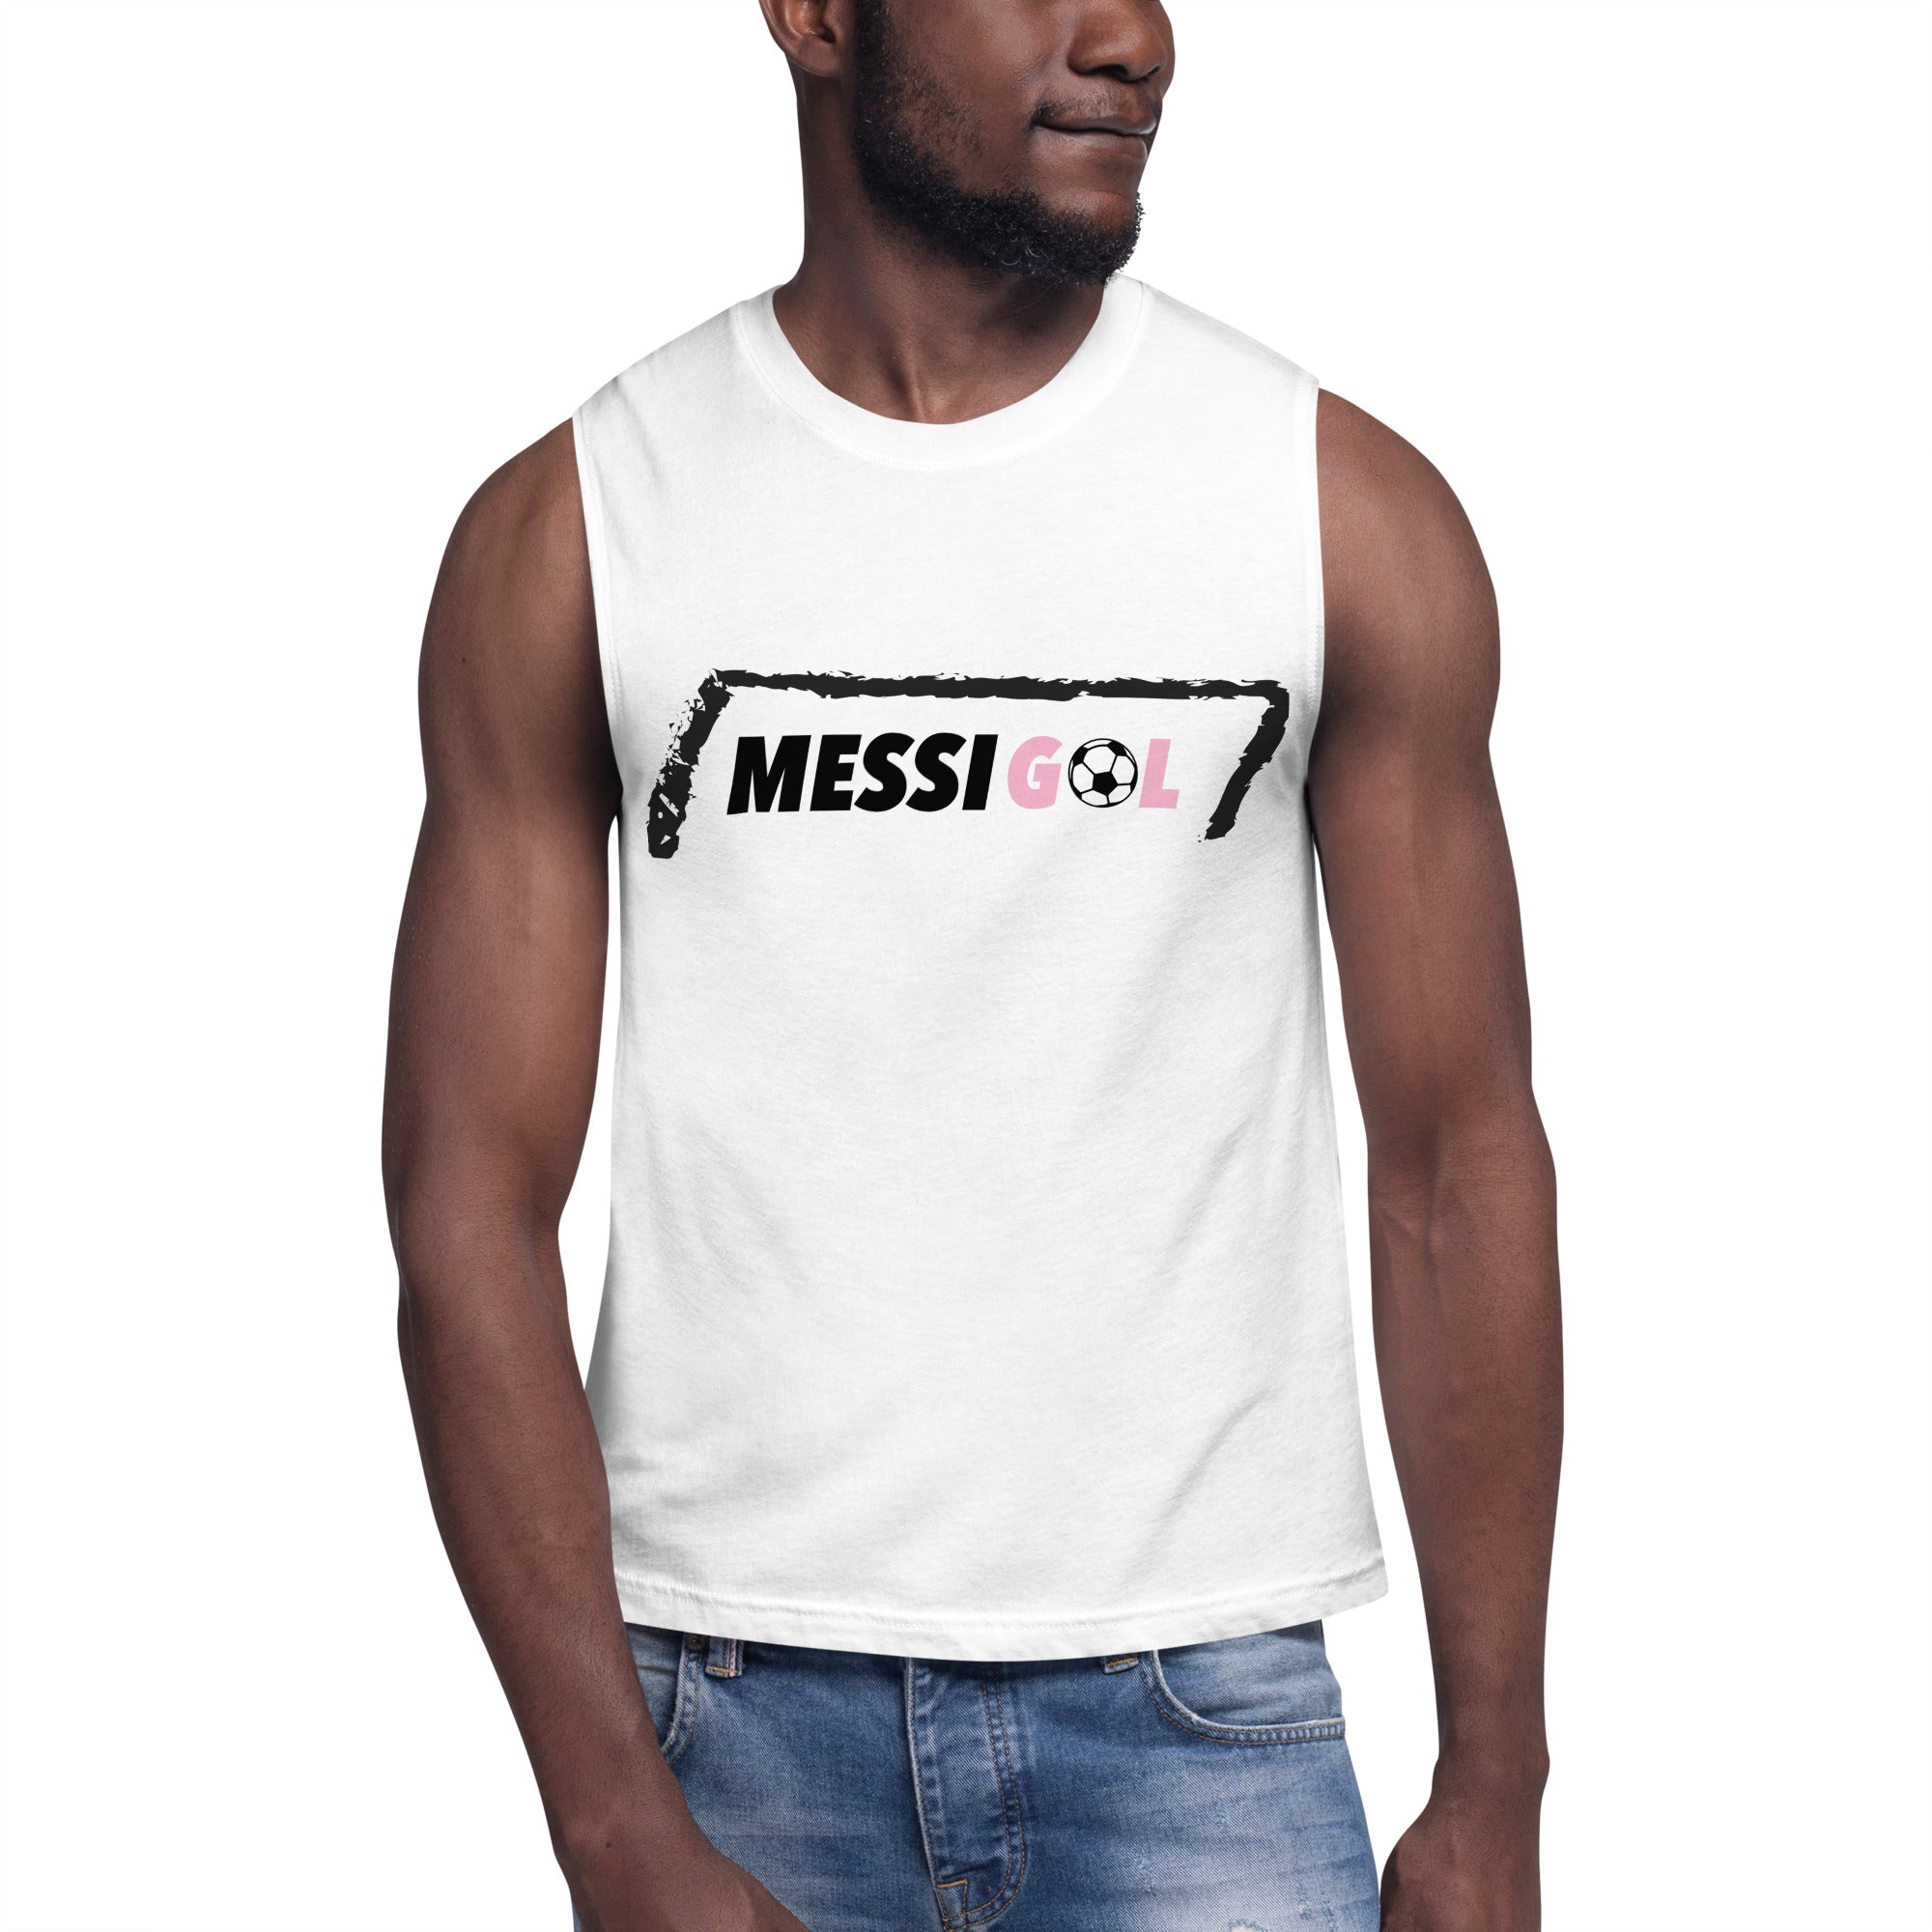 Muscle Shirt for Man, MessiGol - LOS GUSANOS